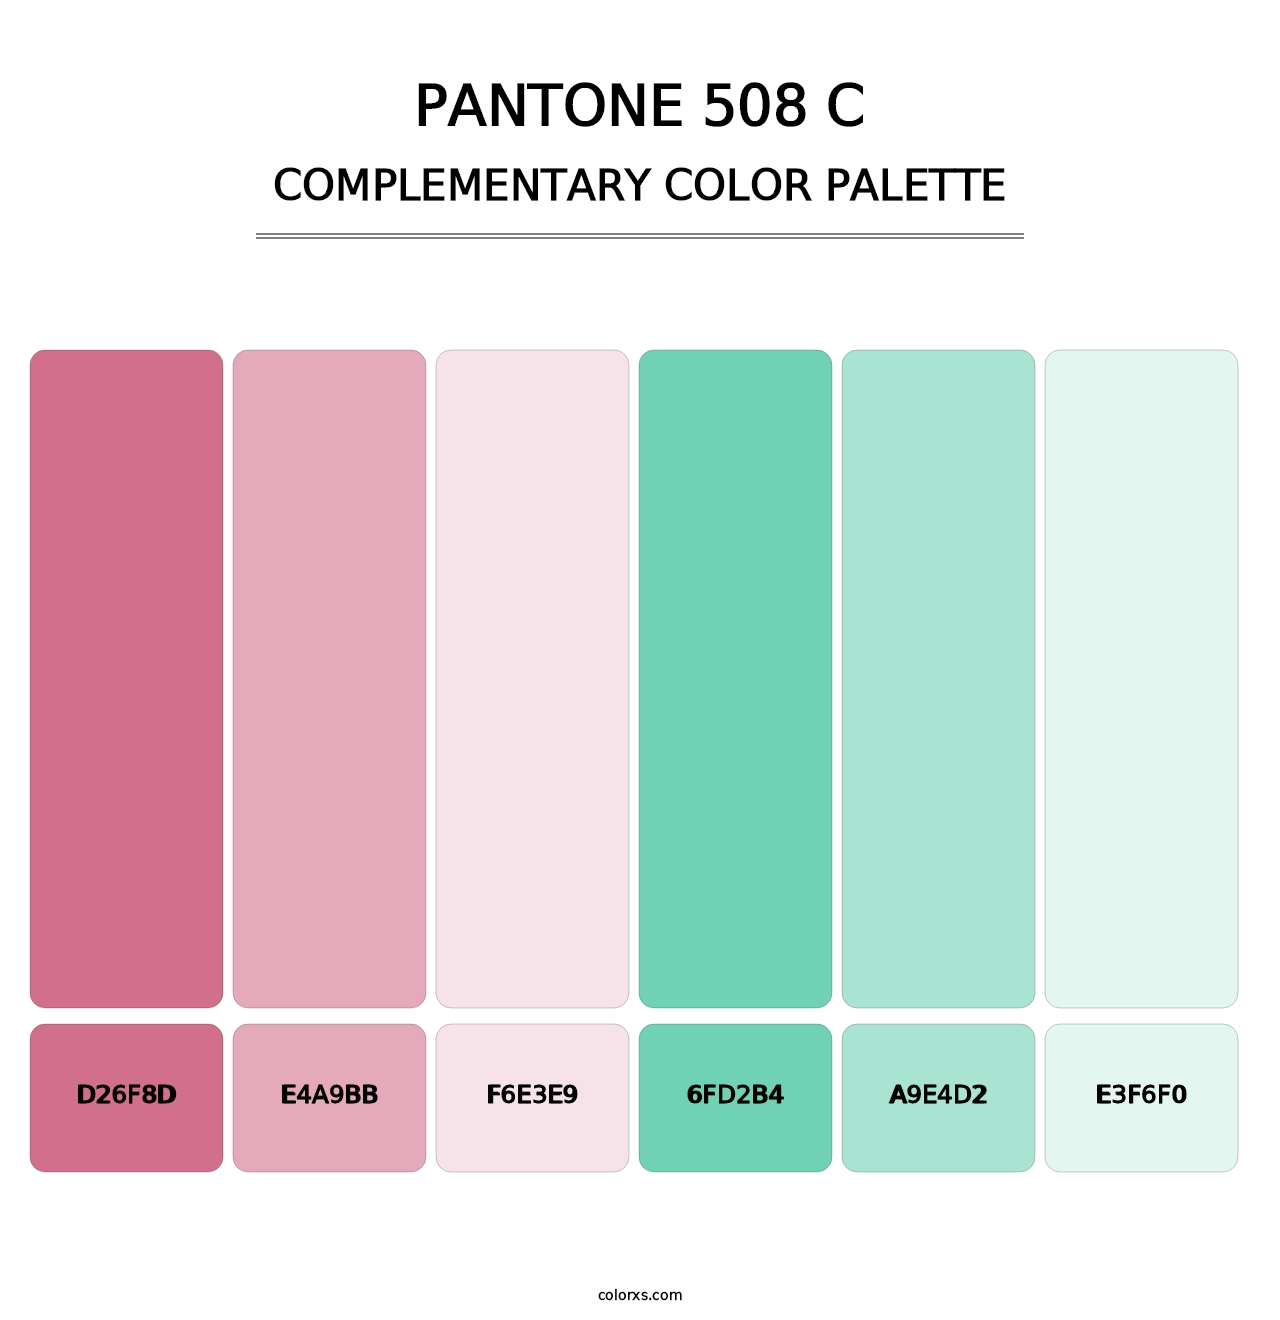 PANTONE 508 C - Complementary Color Palette